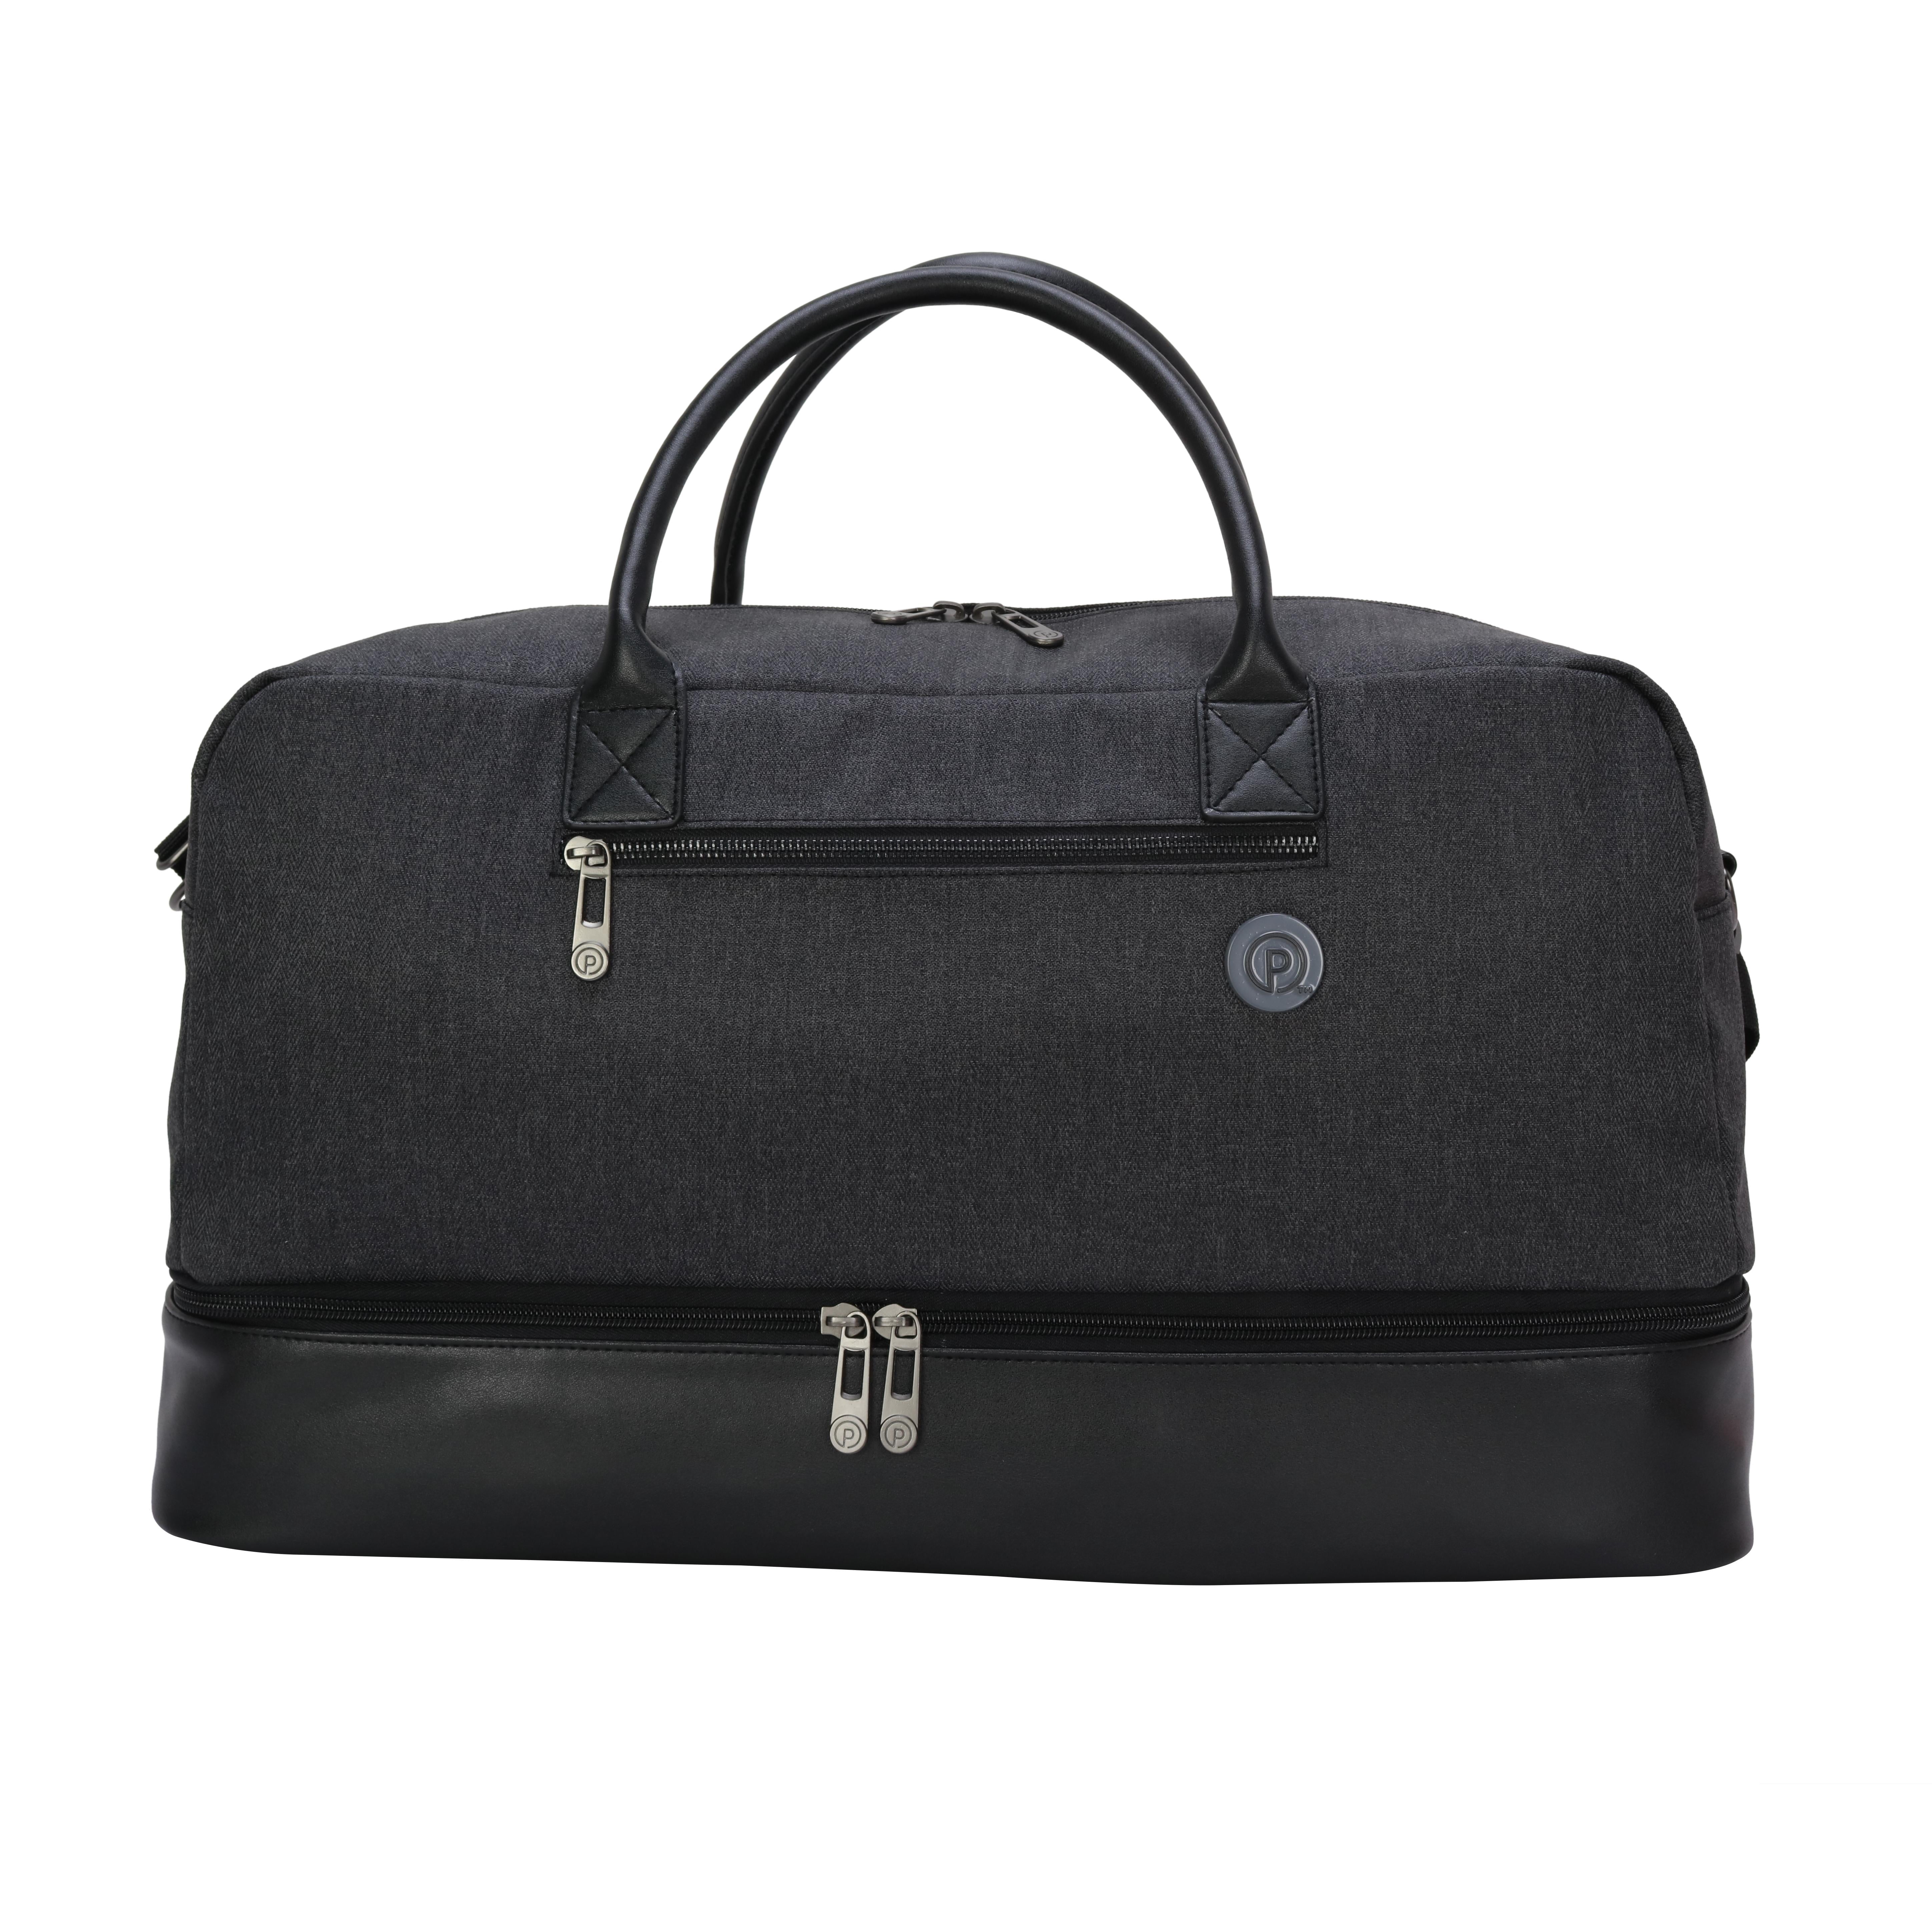 Protege 21 In Drop-Bottom Weekender Travel Duffel Bag, Charcoal